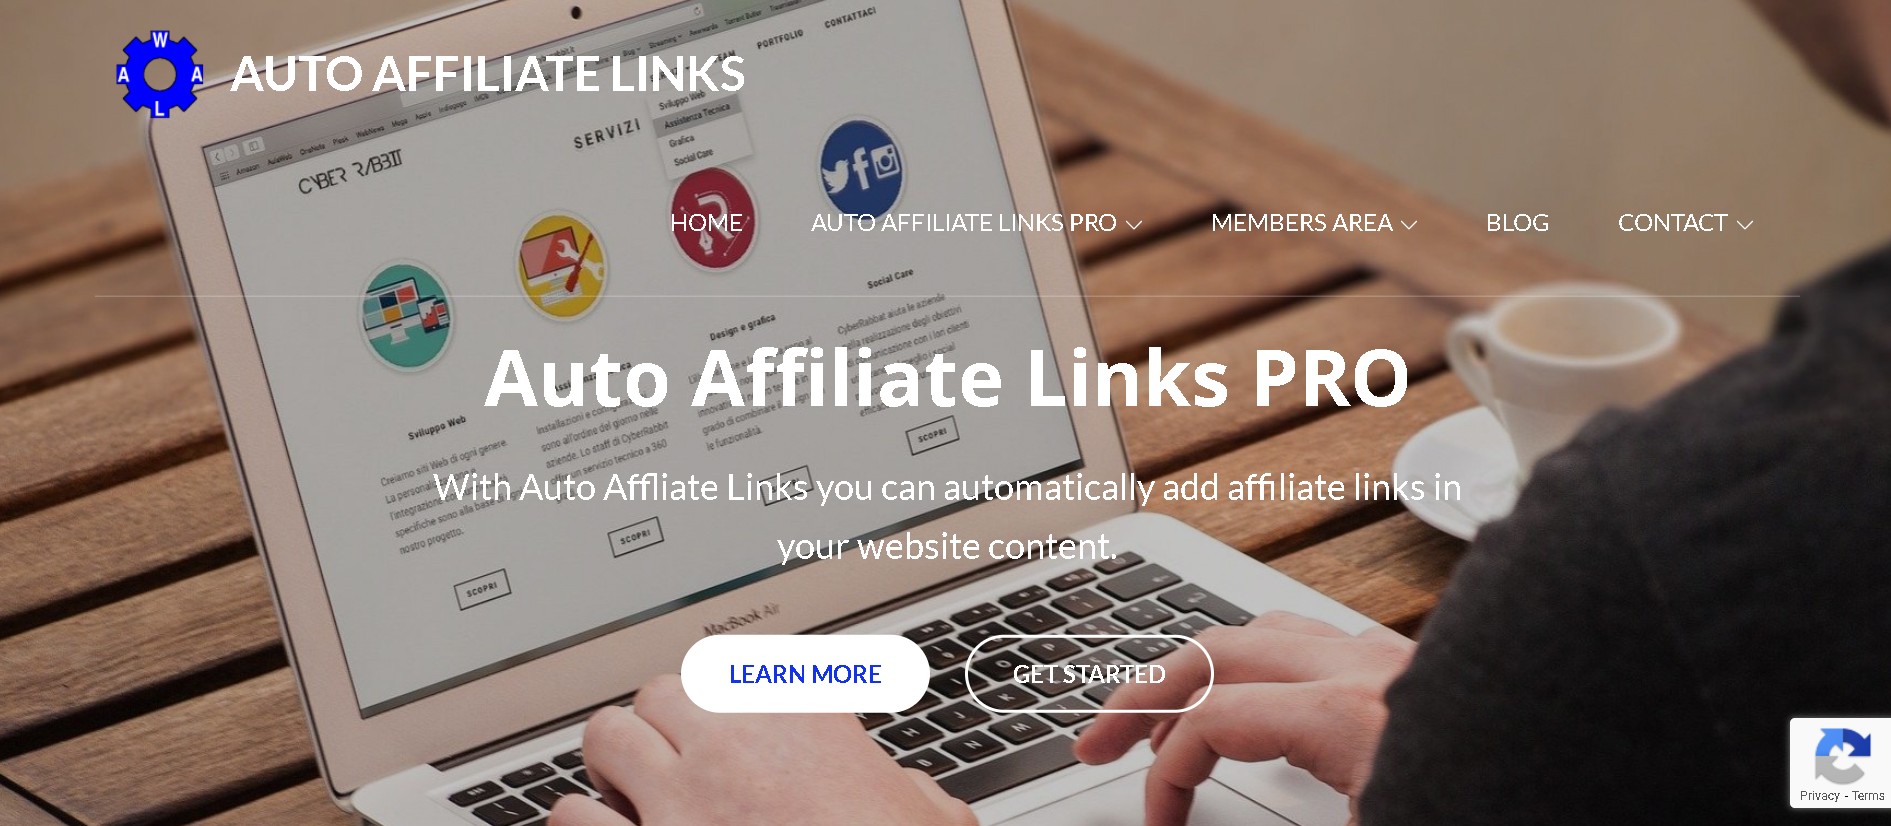 Auto affiliate links